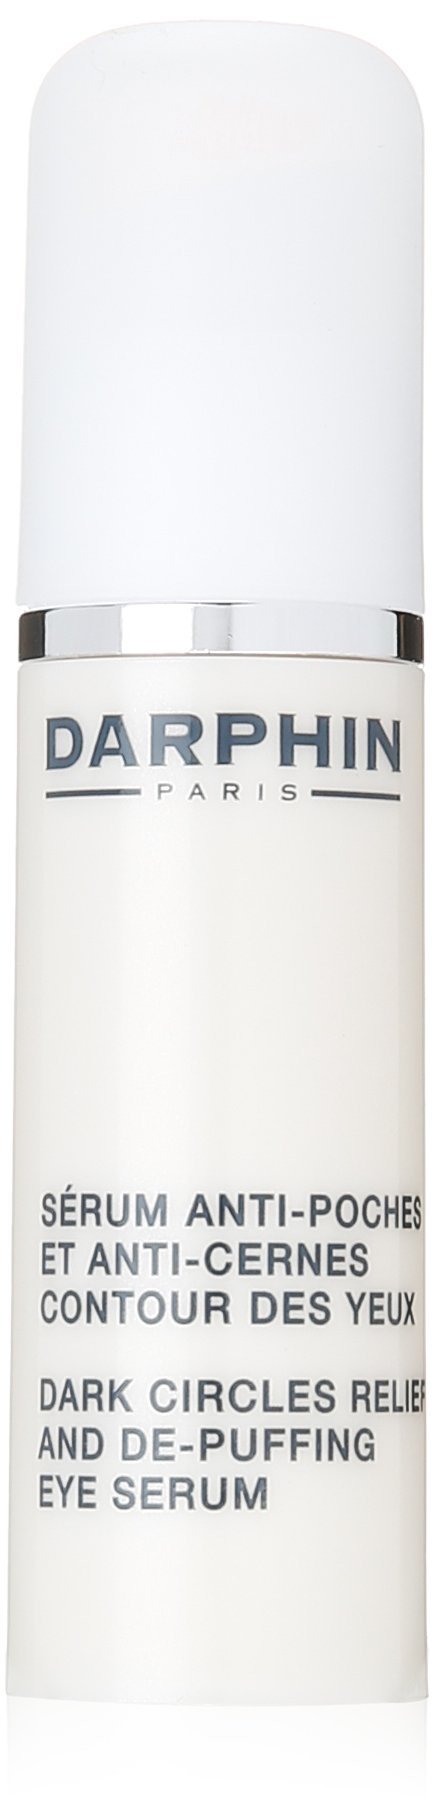 [Australia] - Darphin Dark Circles Relief and De-Puffing Eye Serum, 0.5 Ounce 